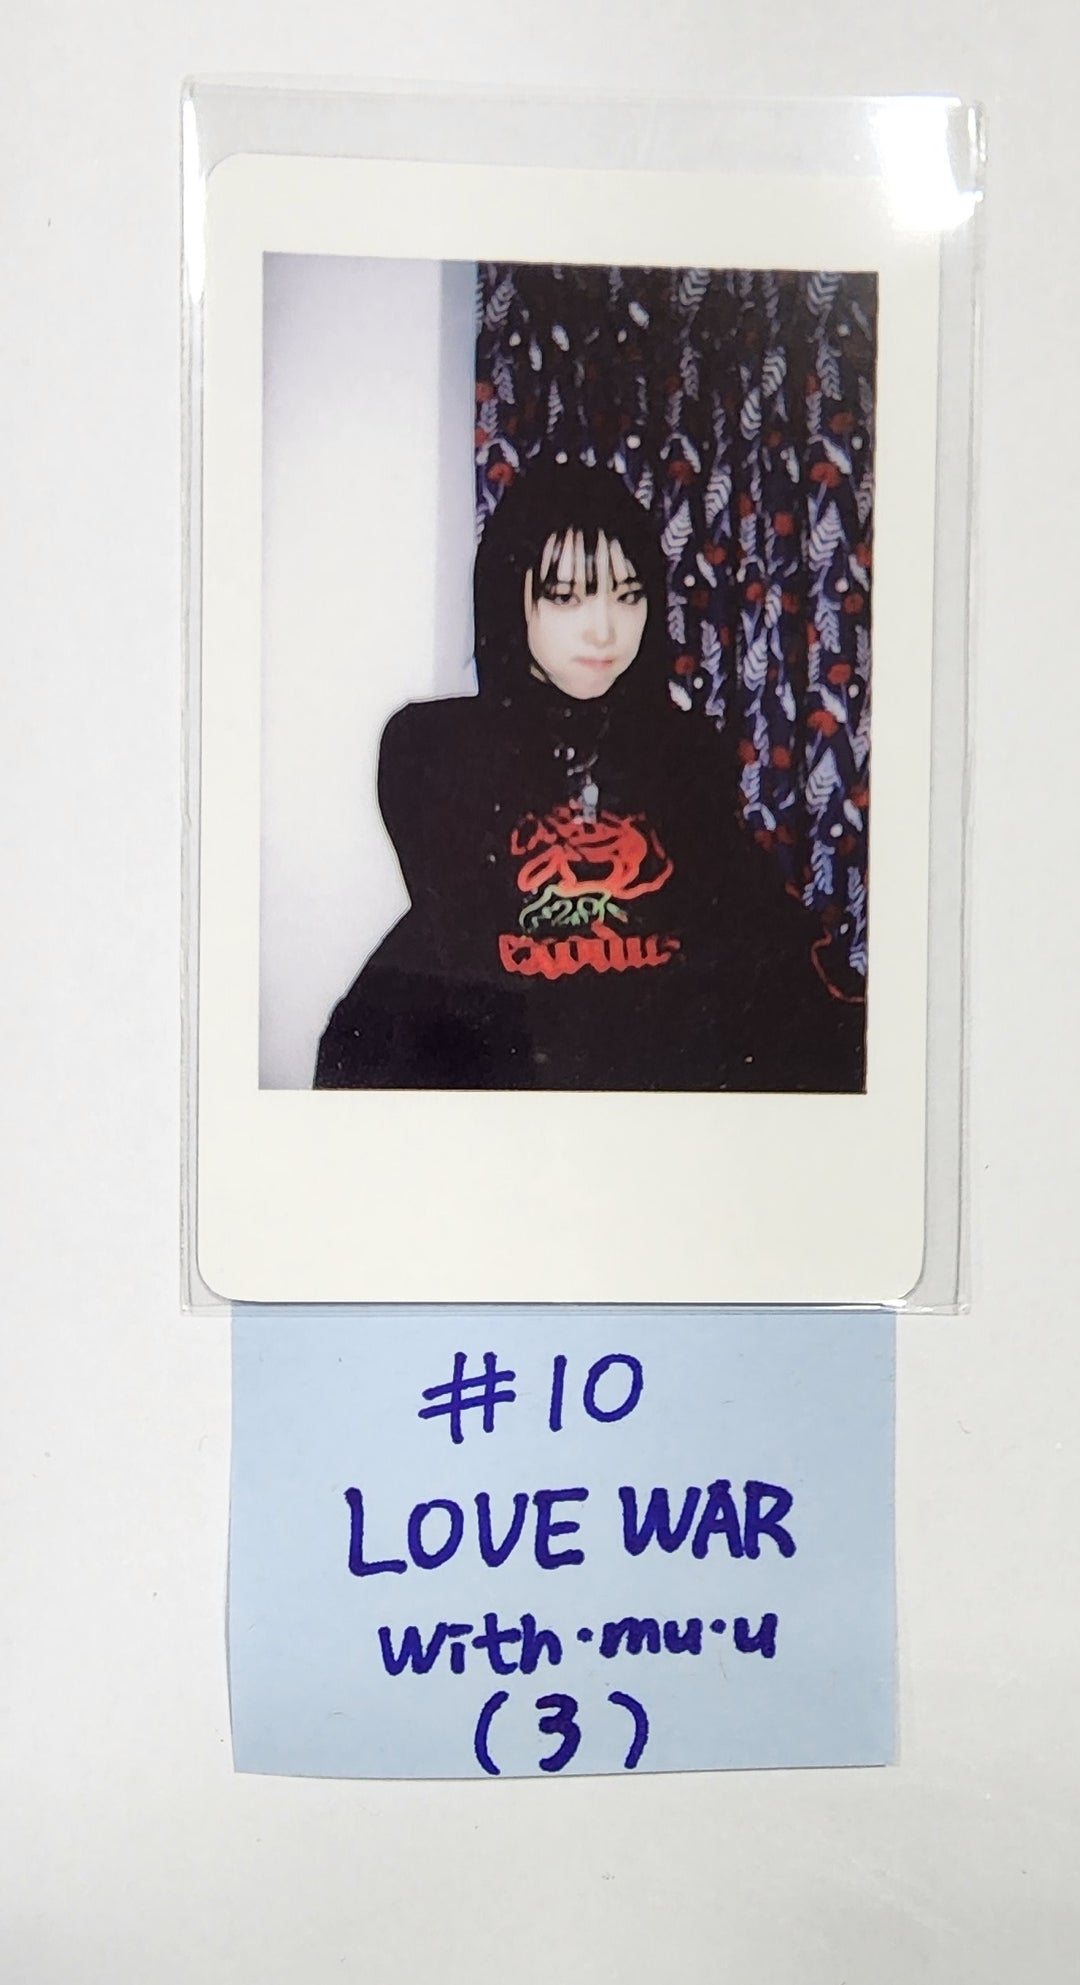 YENA "Love War" - Withmuu 추첨 이벤트 포토카드